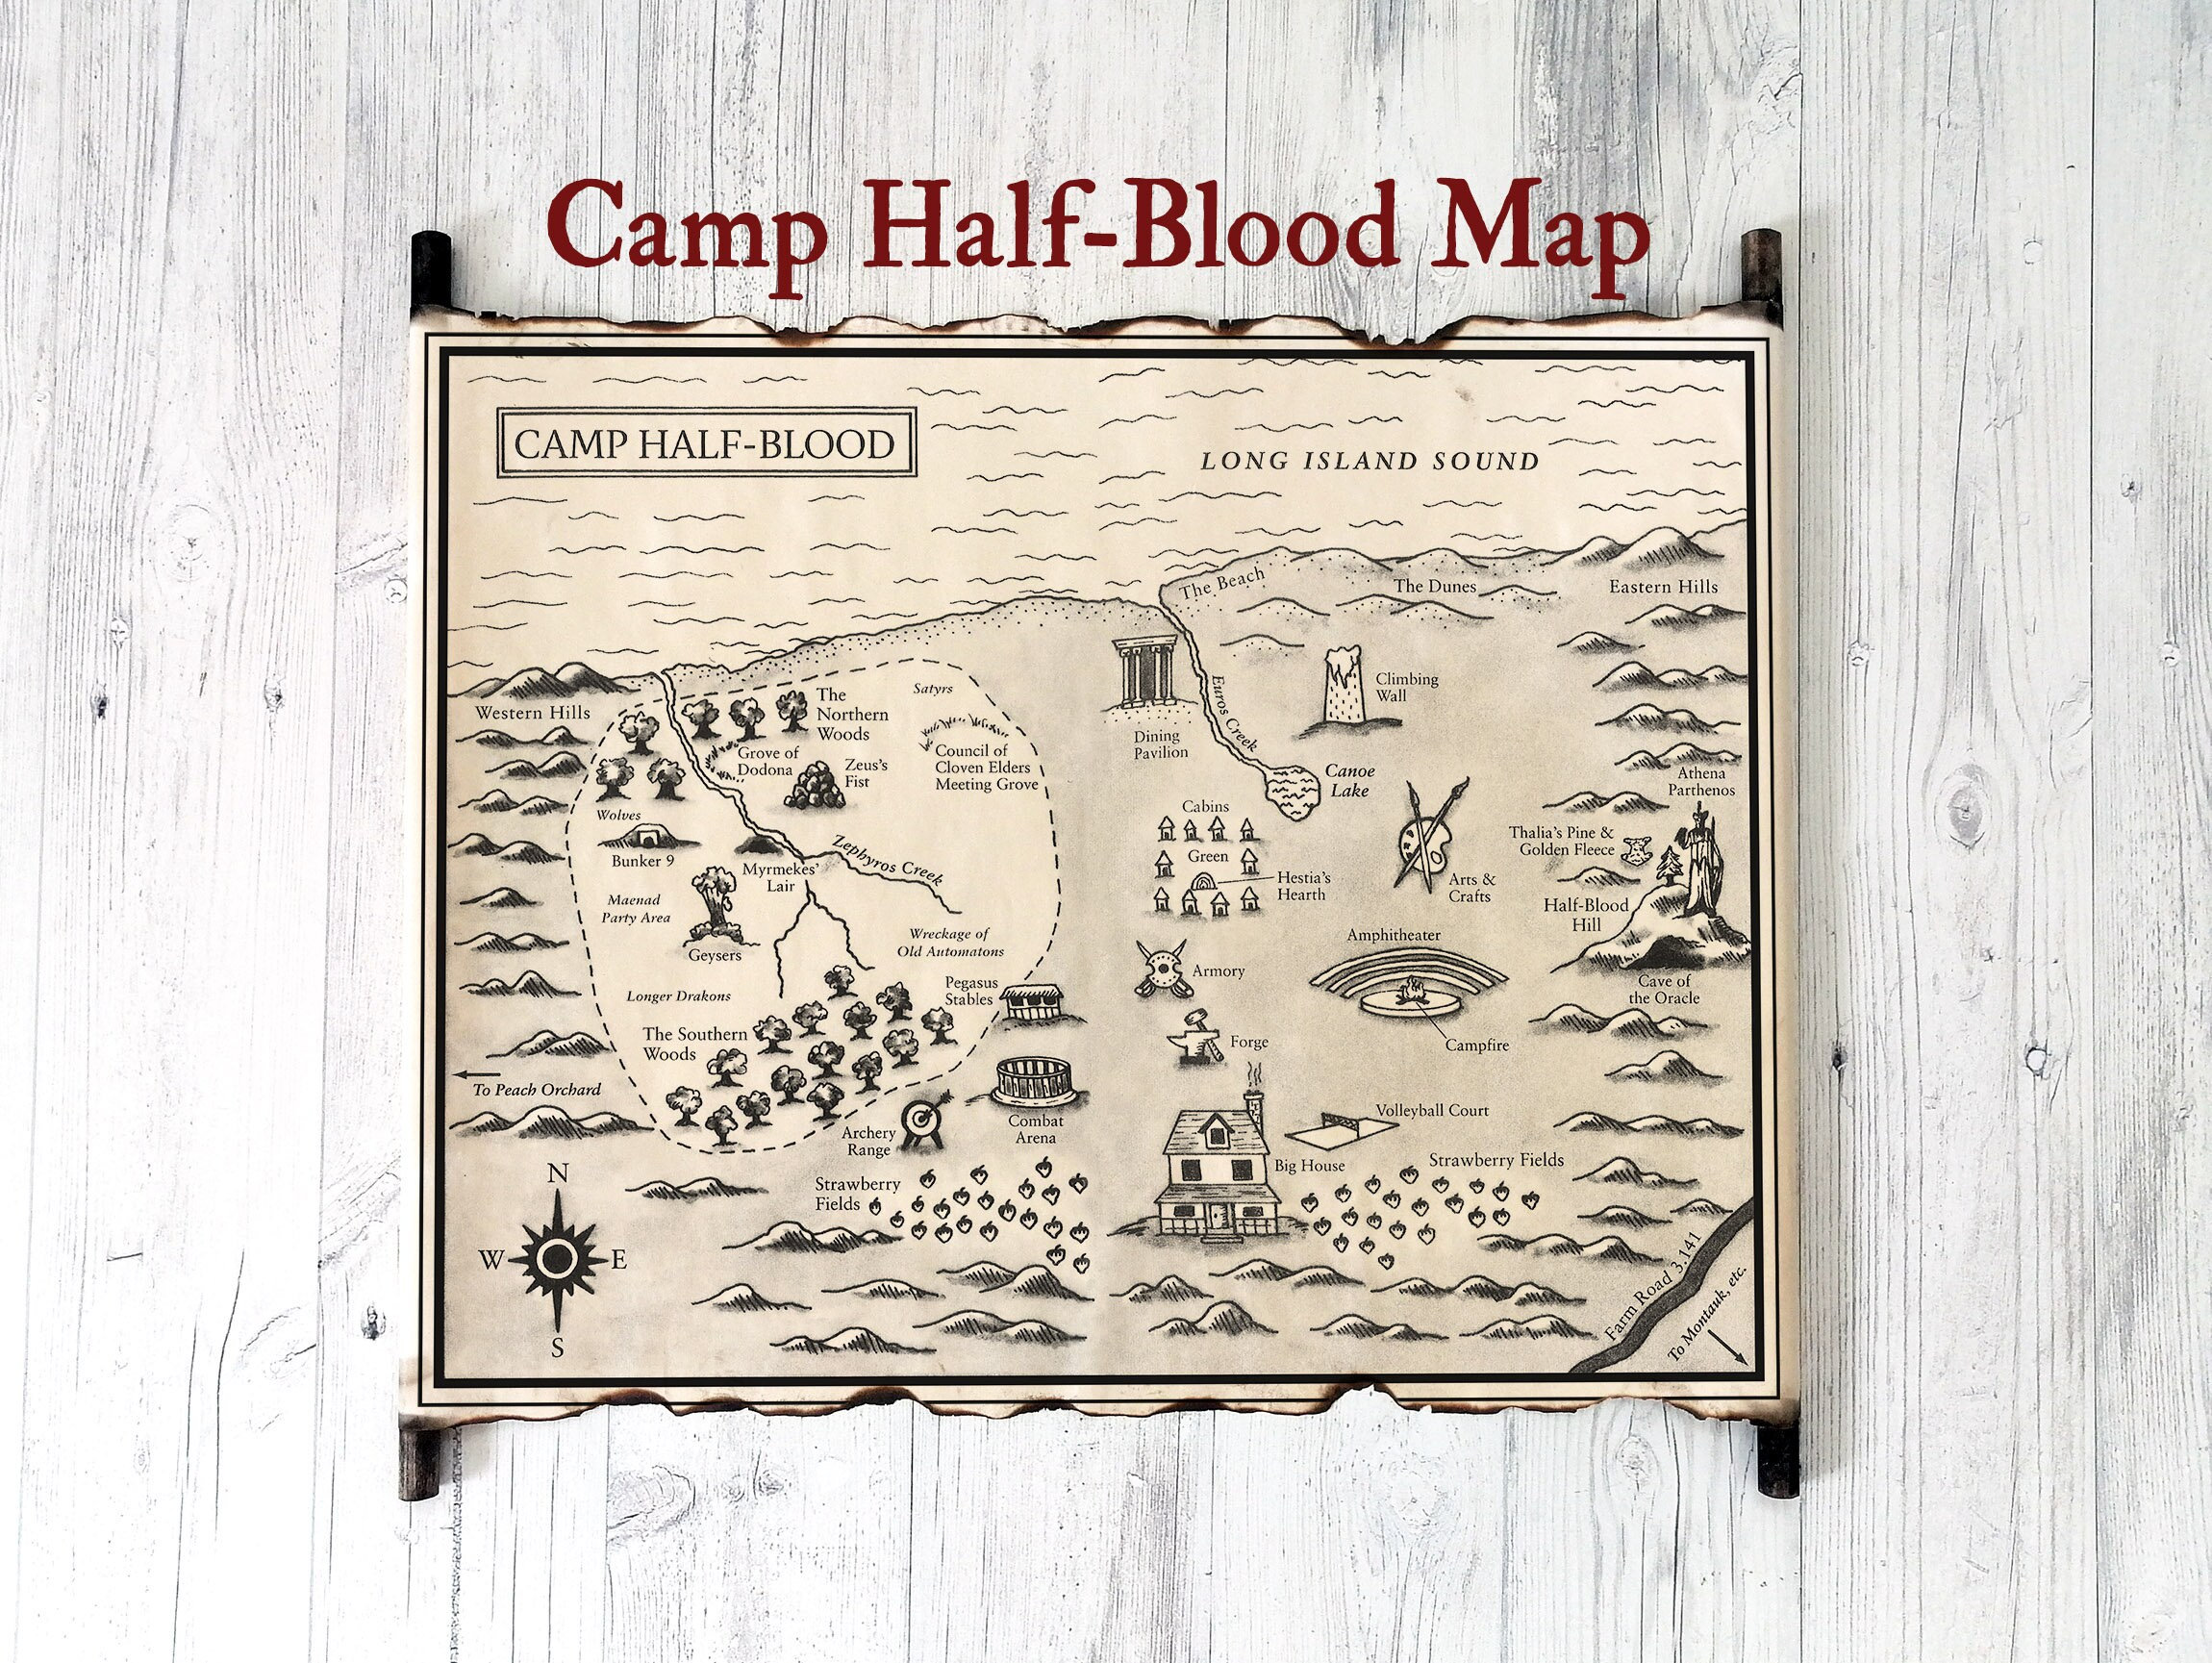 Map of Camp Half Blood | Postcard